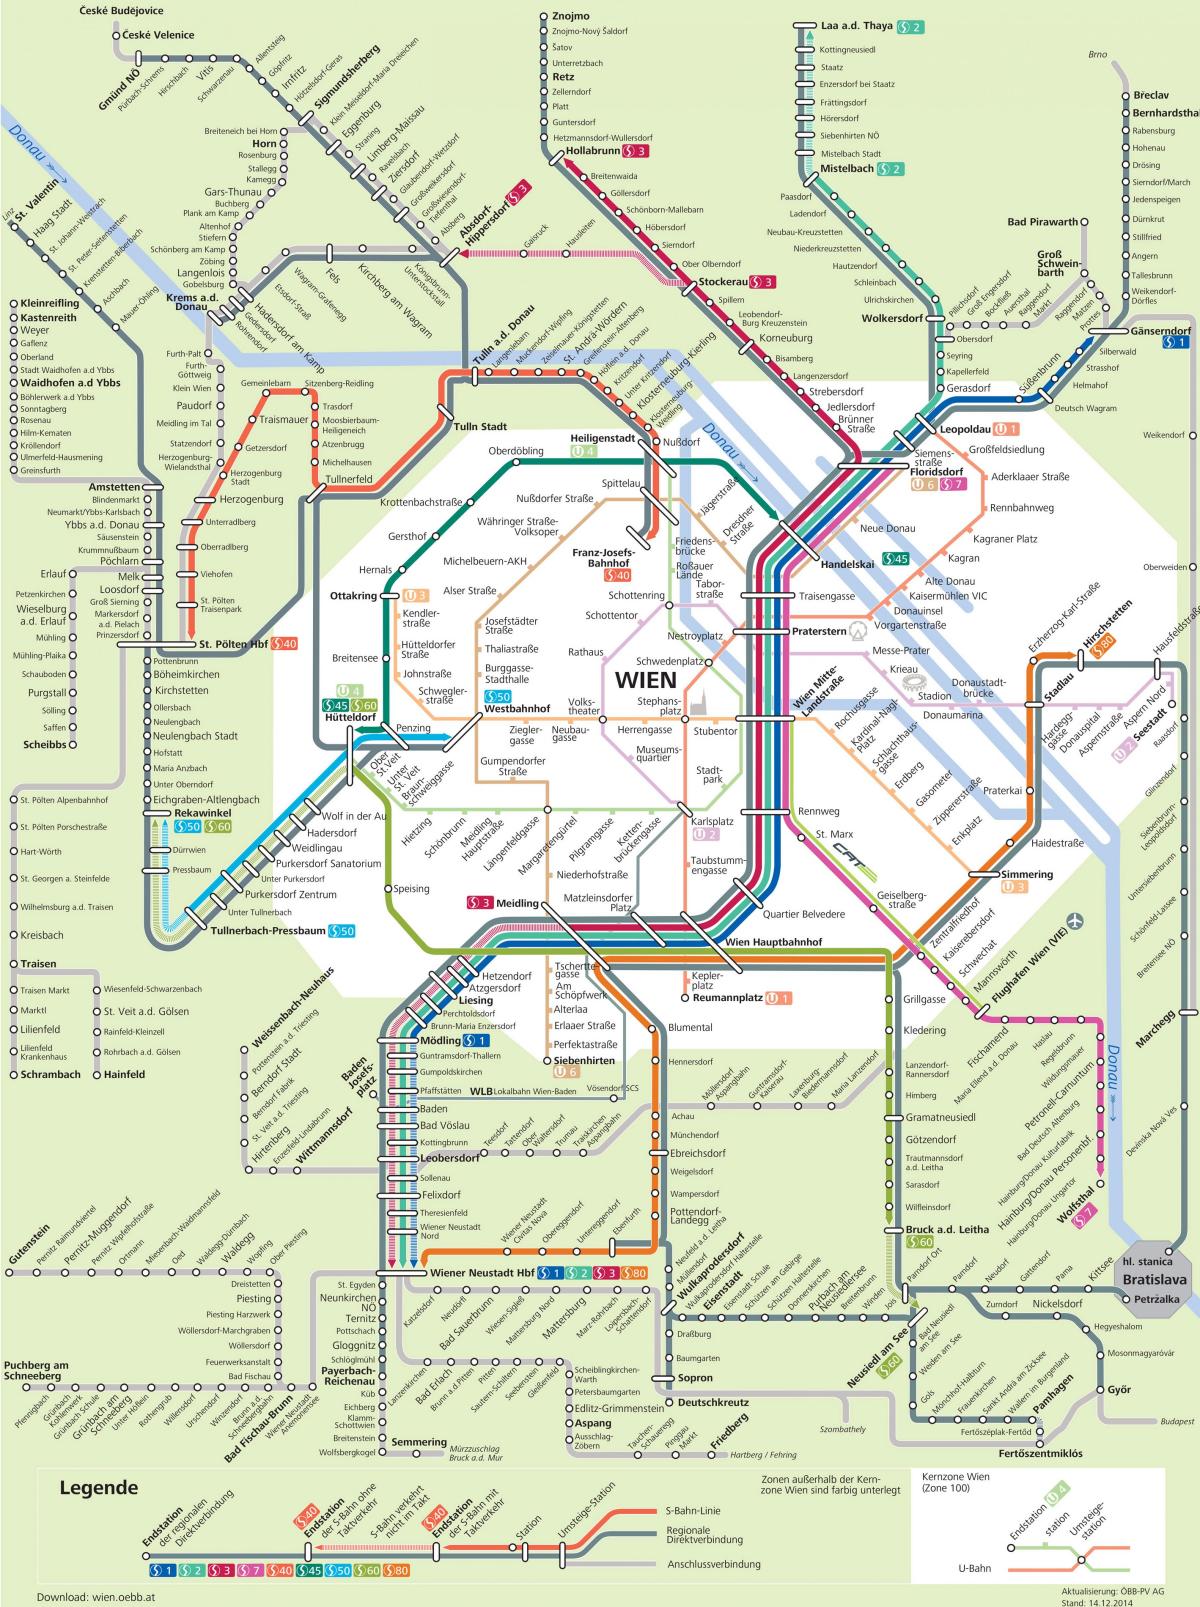 Wienin kaupungin liikenteen kartta